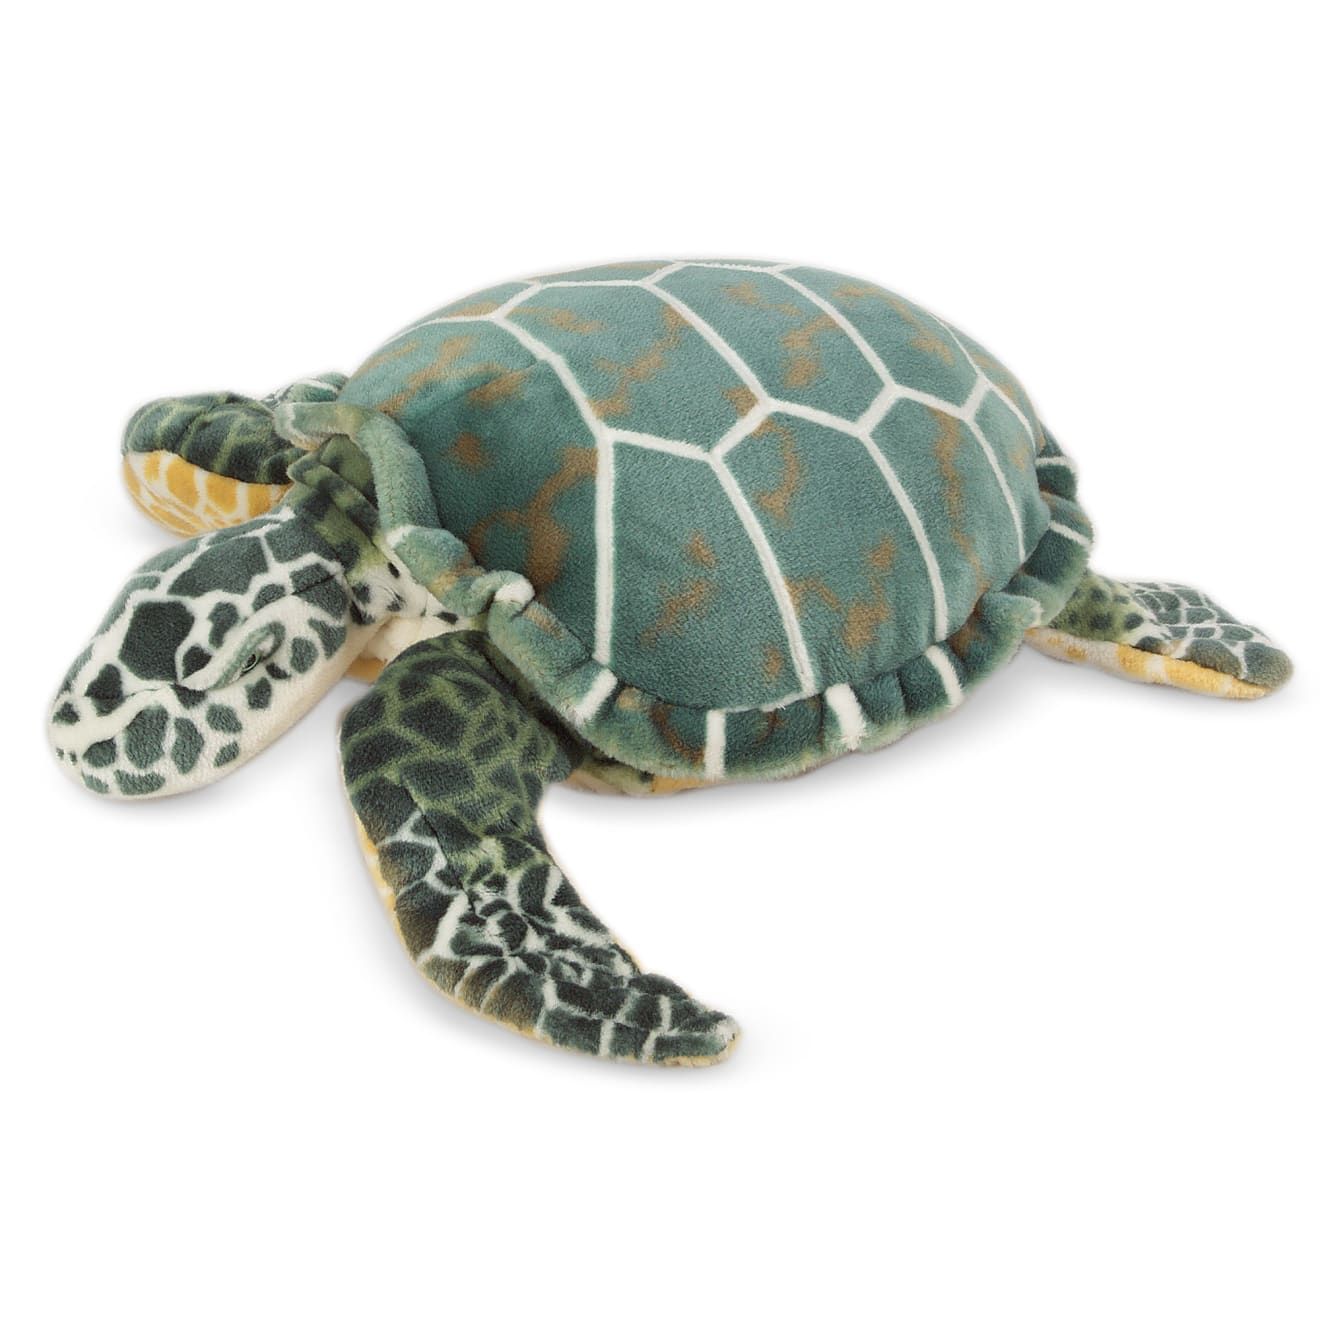 Sea Turtle Giant Stuffed Animal